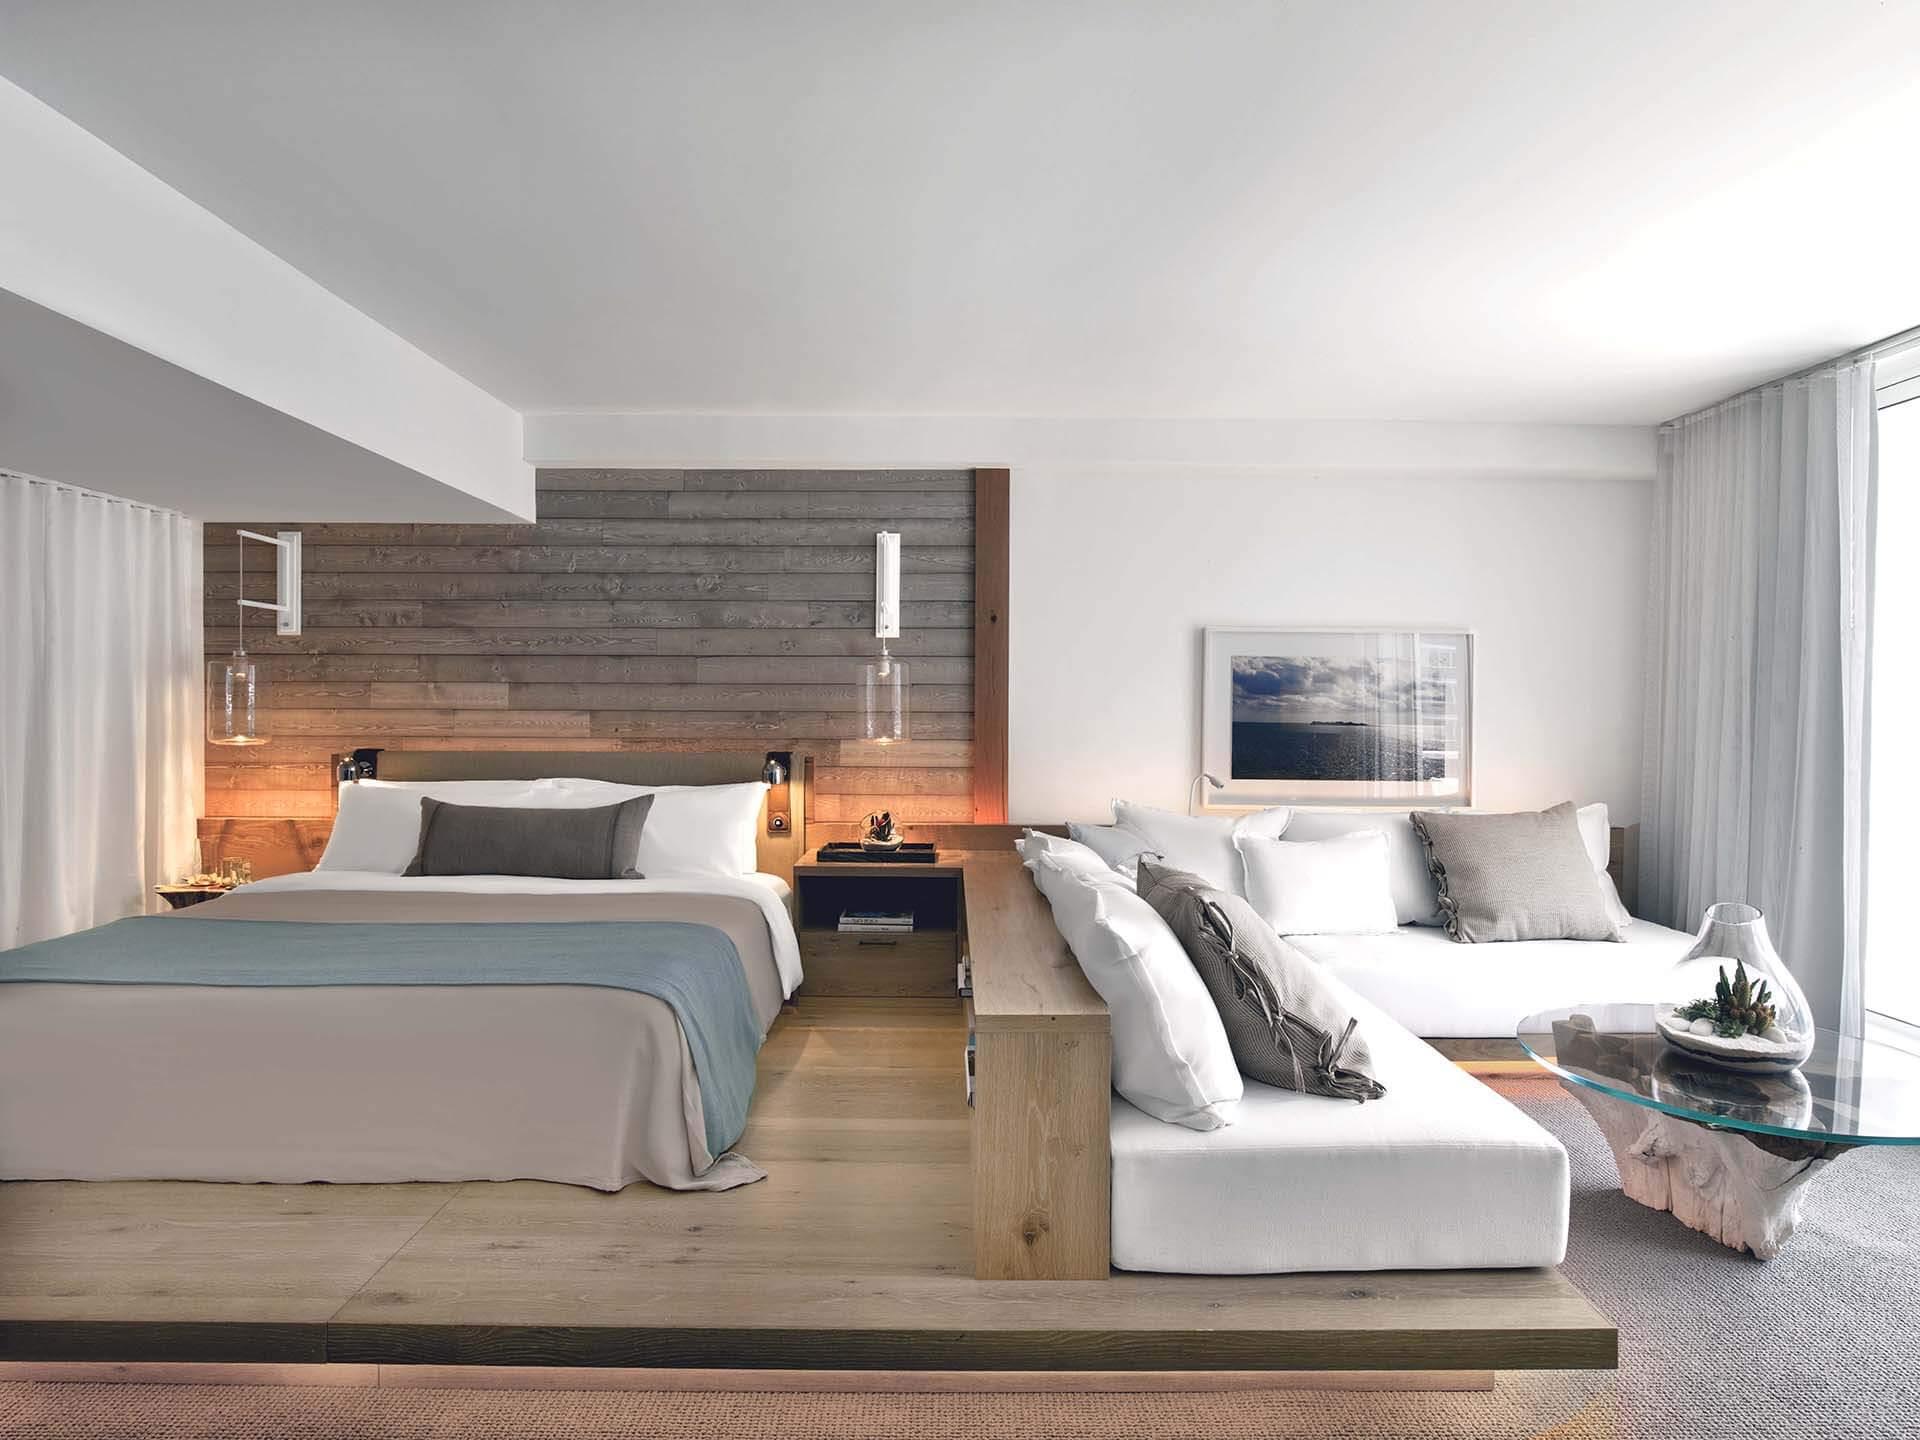 Hotel Room Bedroom Wood Platform Built In Couch 040920 1142 01 